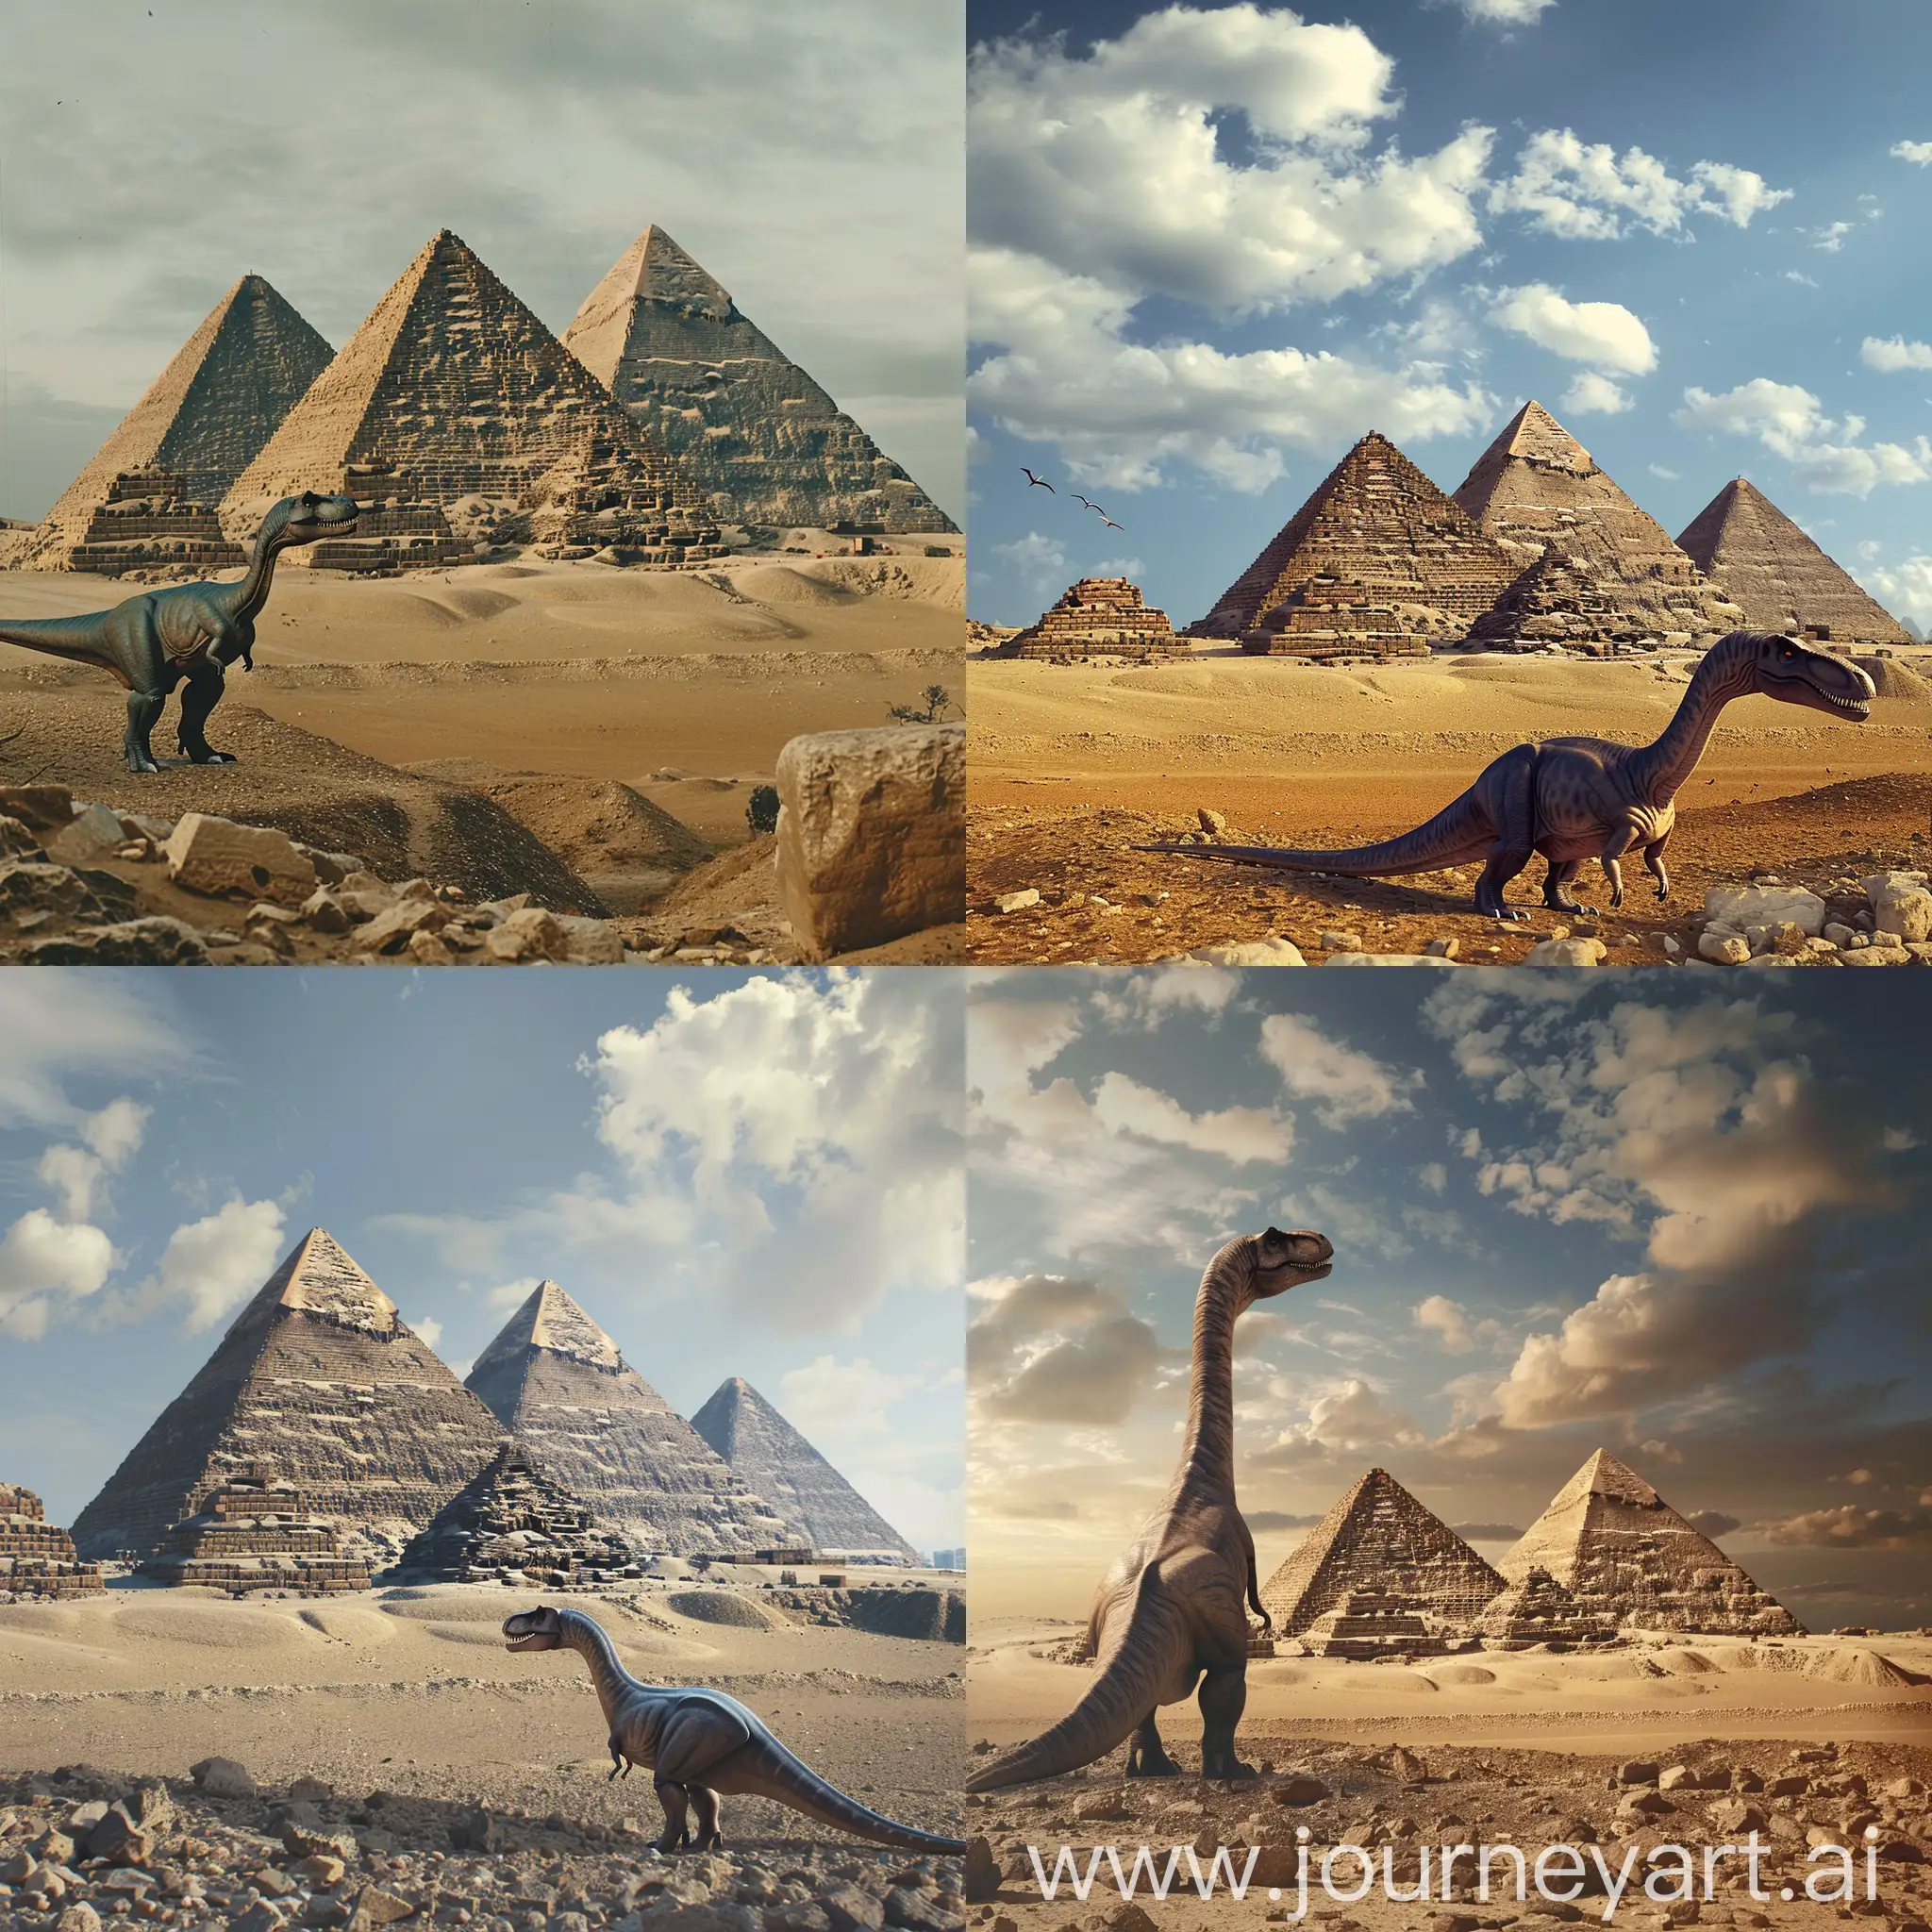 Dinosaur-Standing-Beside-Three-Pyramids-in-Vast-Desert-Landscape